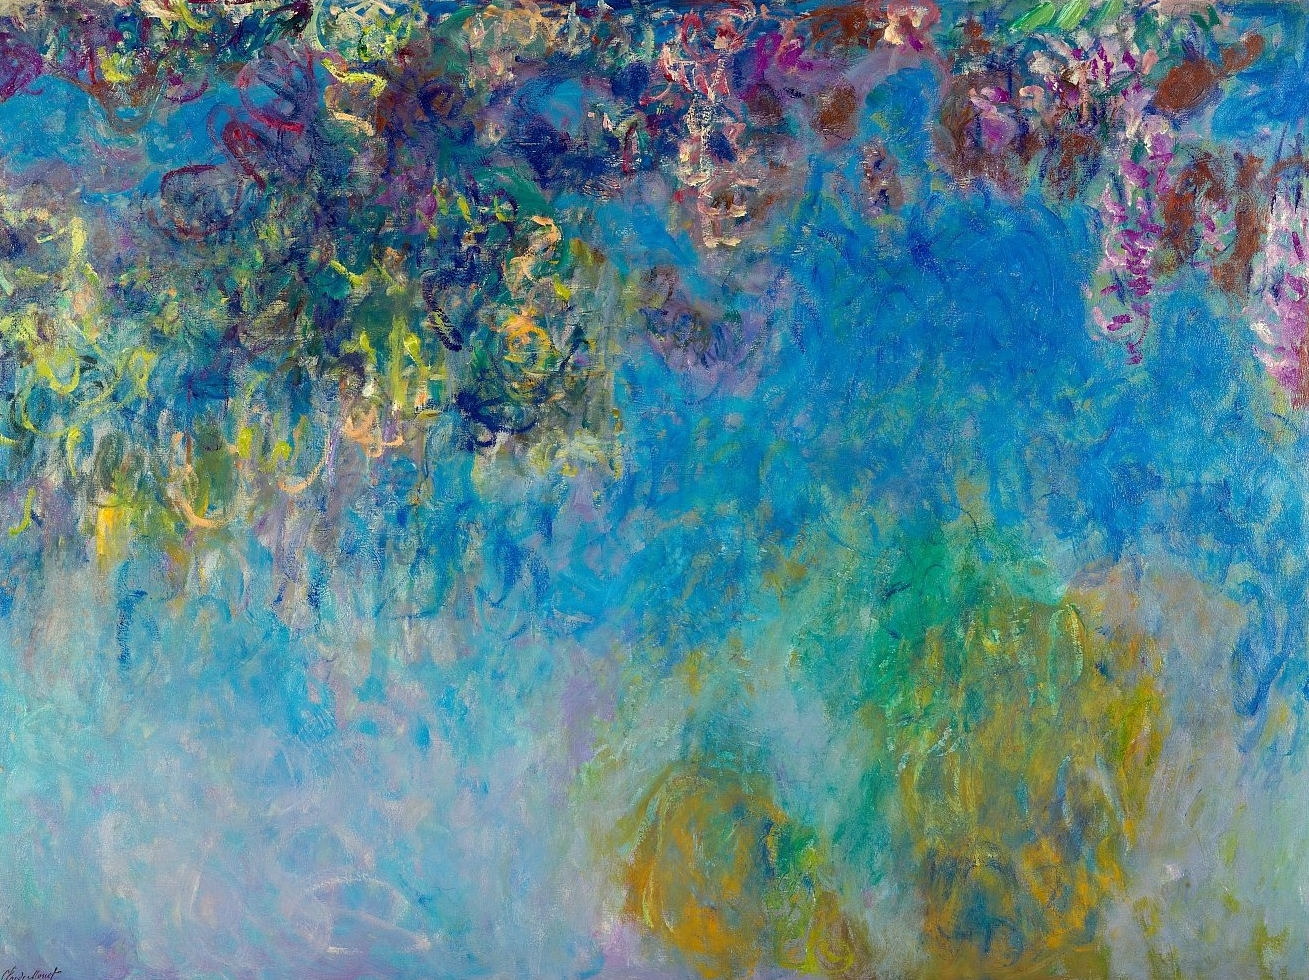 Claude+Monet-1840-1926 (231).jpg